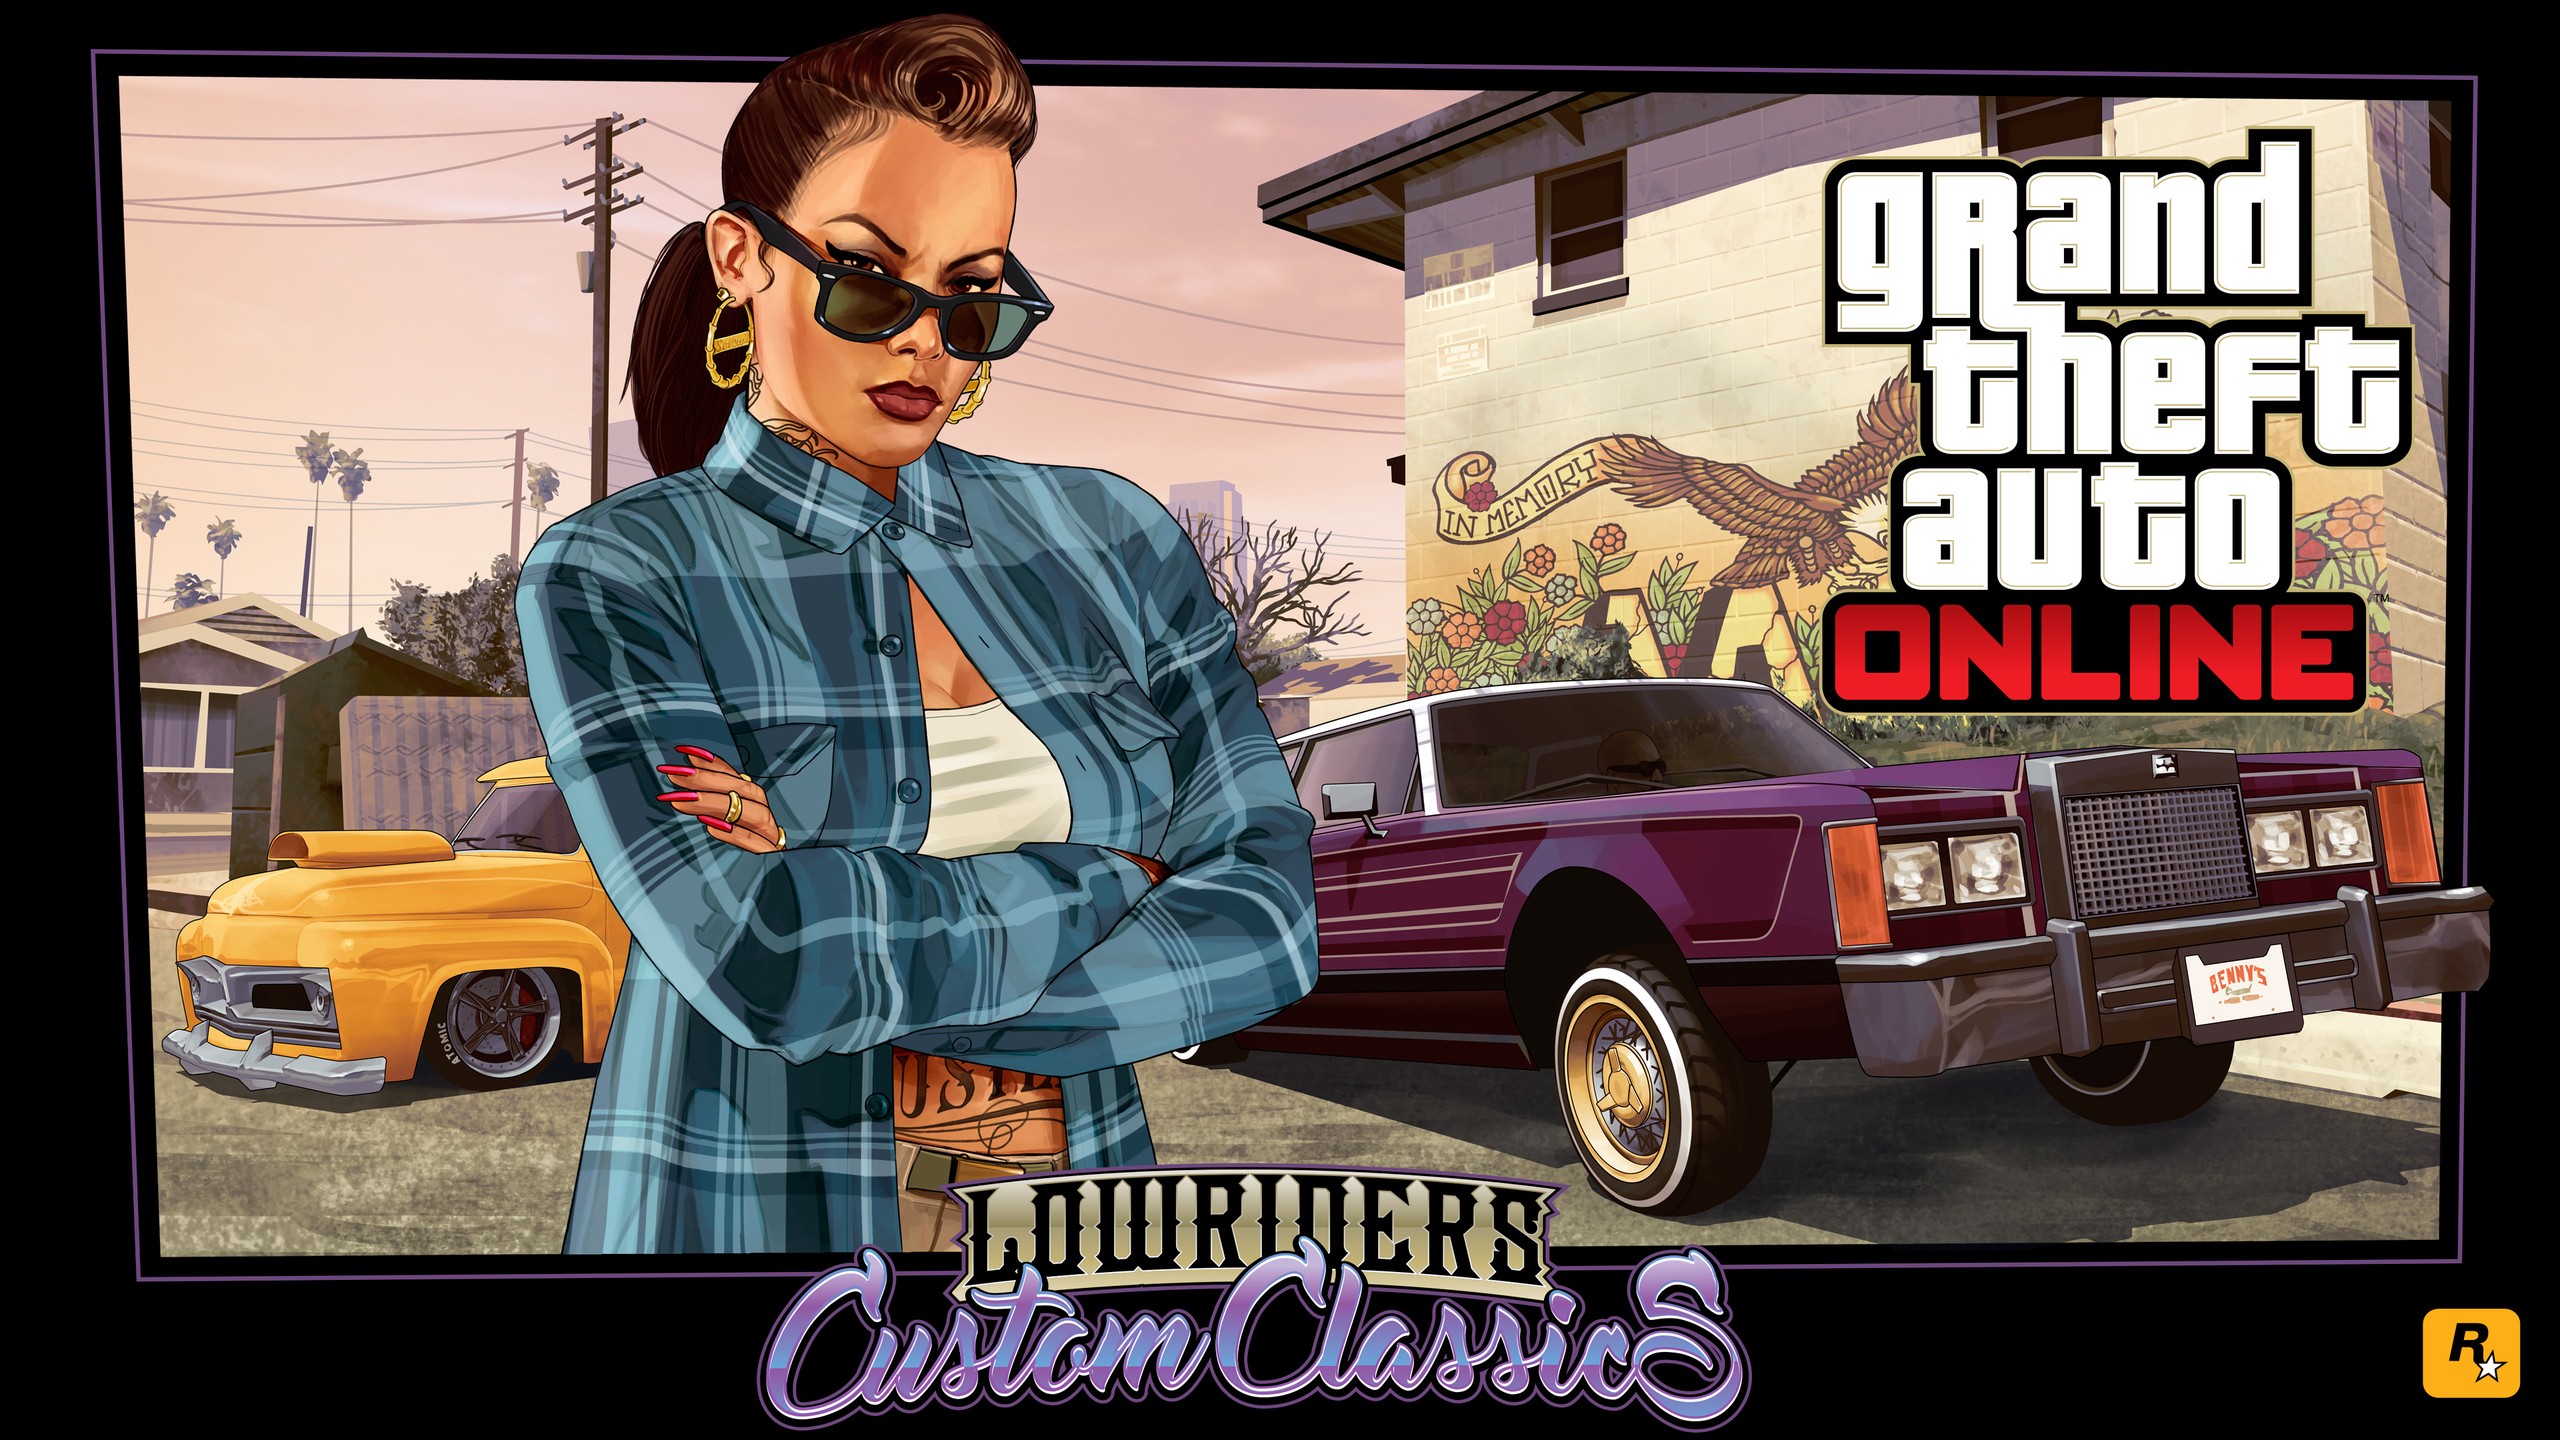 Grand Theft Auto V, Grand Theft Auto Online Wallpaper